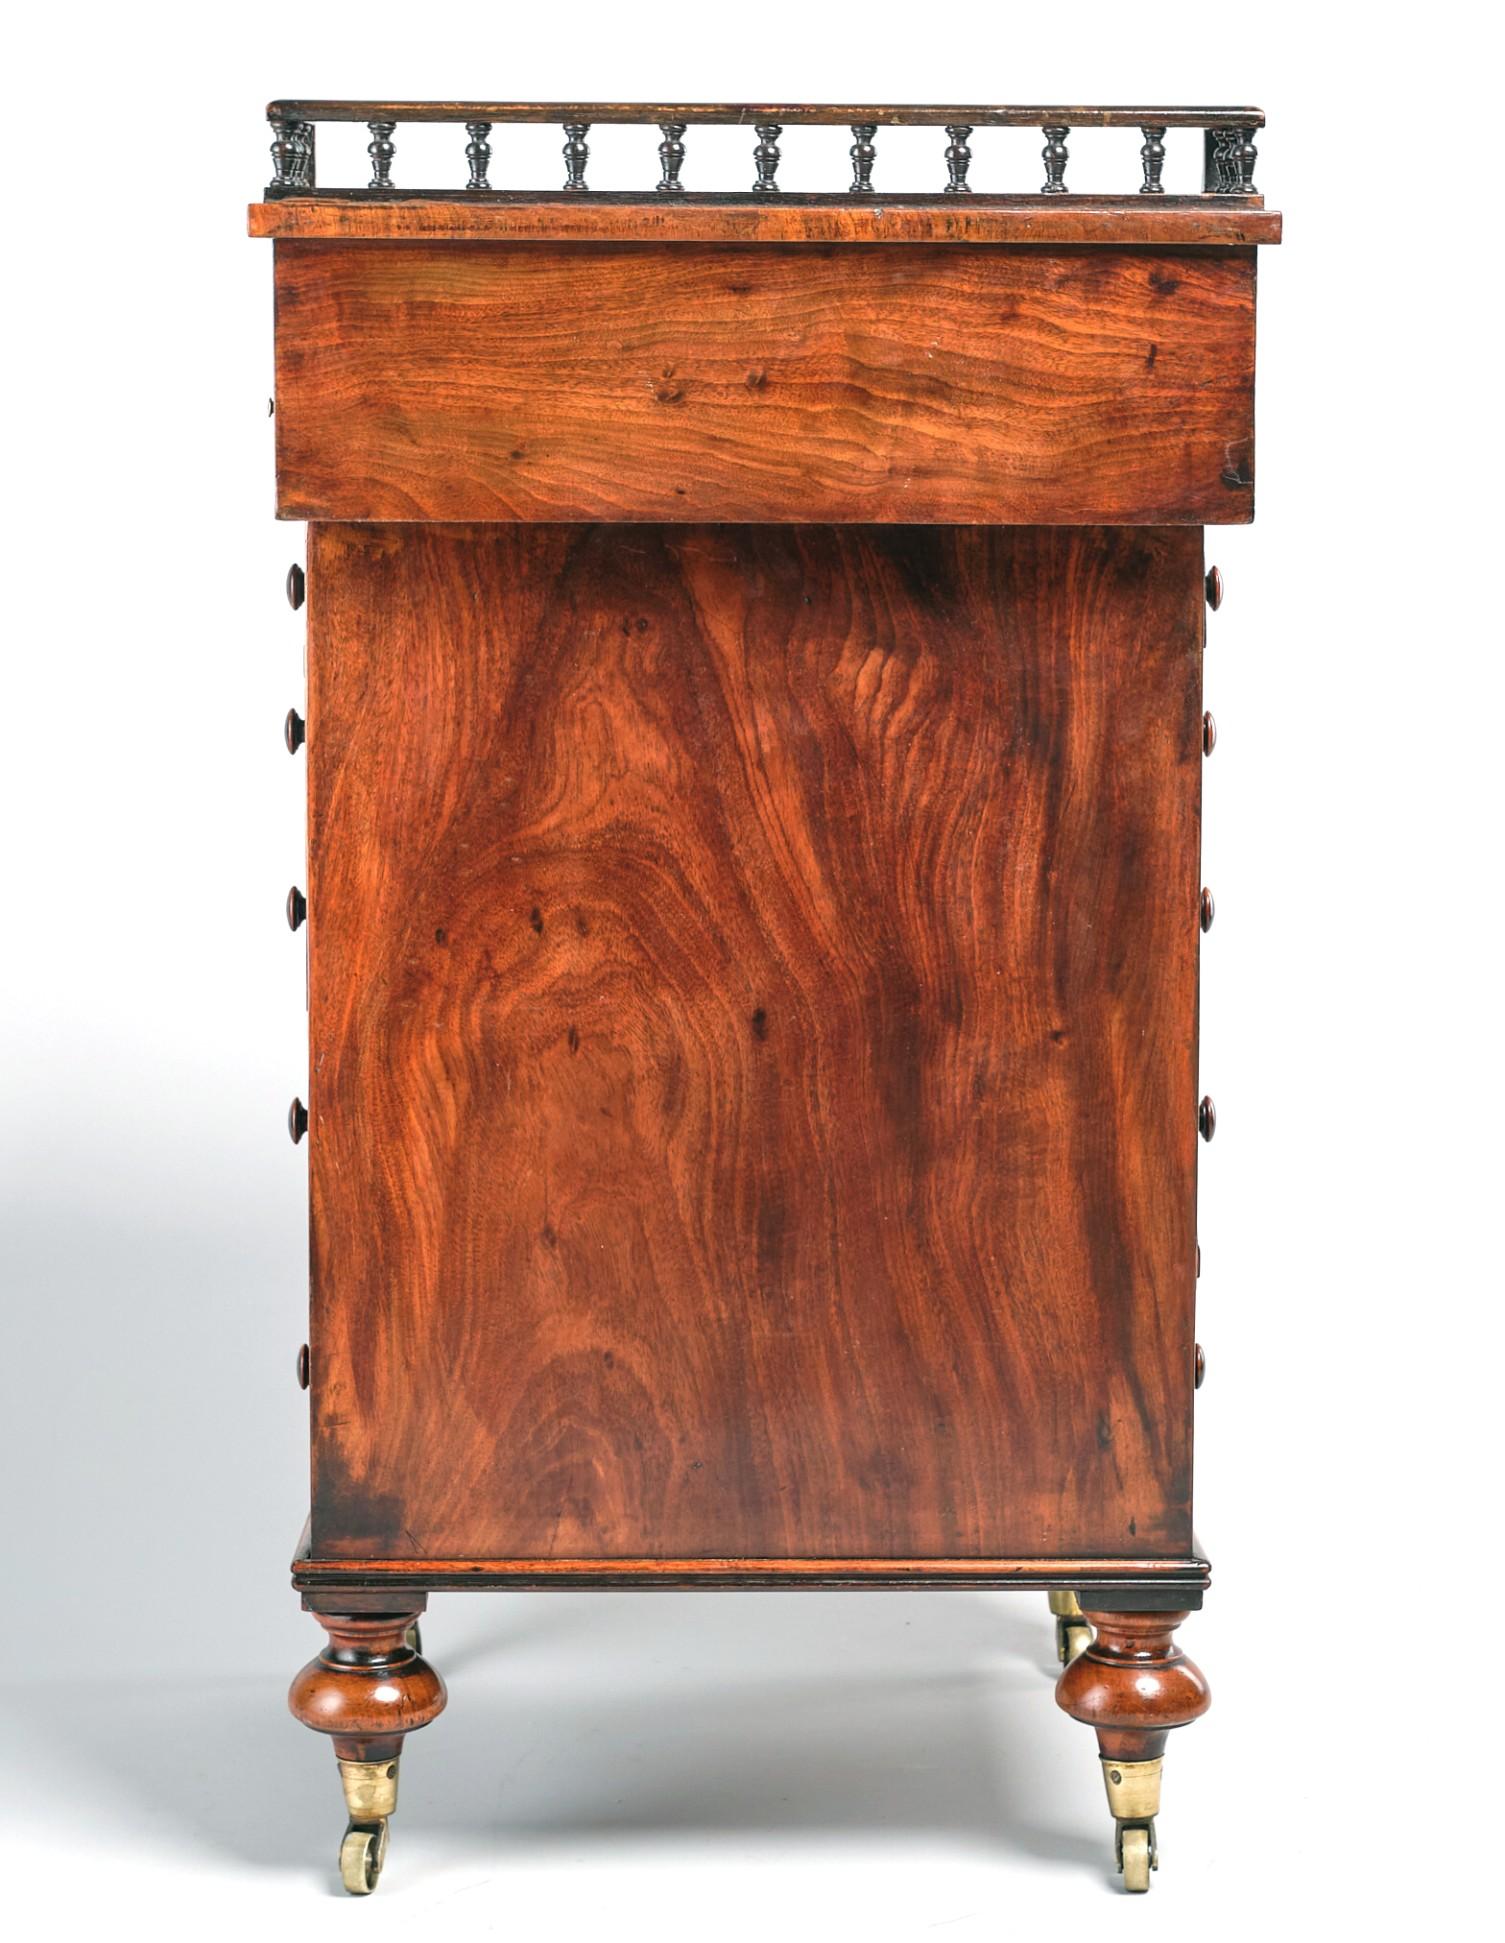 A Superior English Regency Period Davenport Desk in Figured Mahogany, Circa 1830 For Sale 13